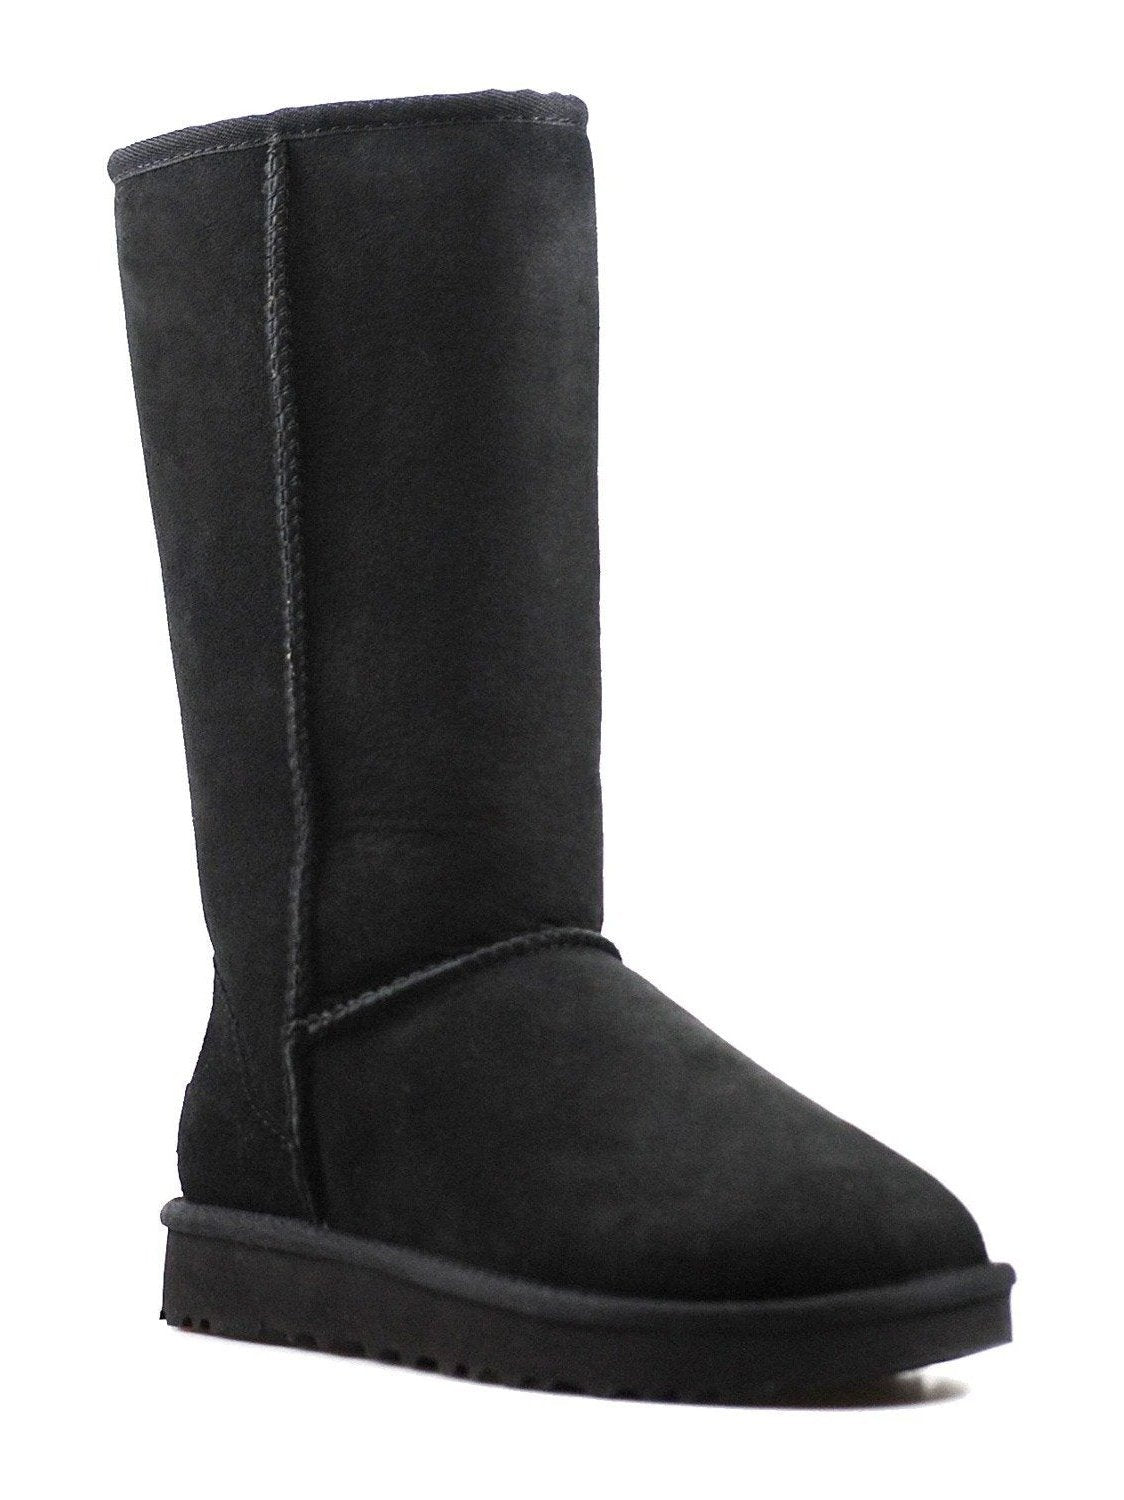 Ugg Women's Classic Tall Boots Black 5815.